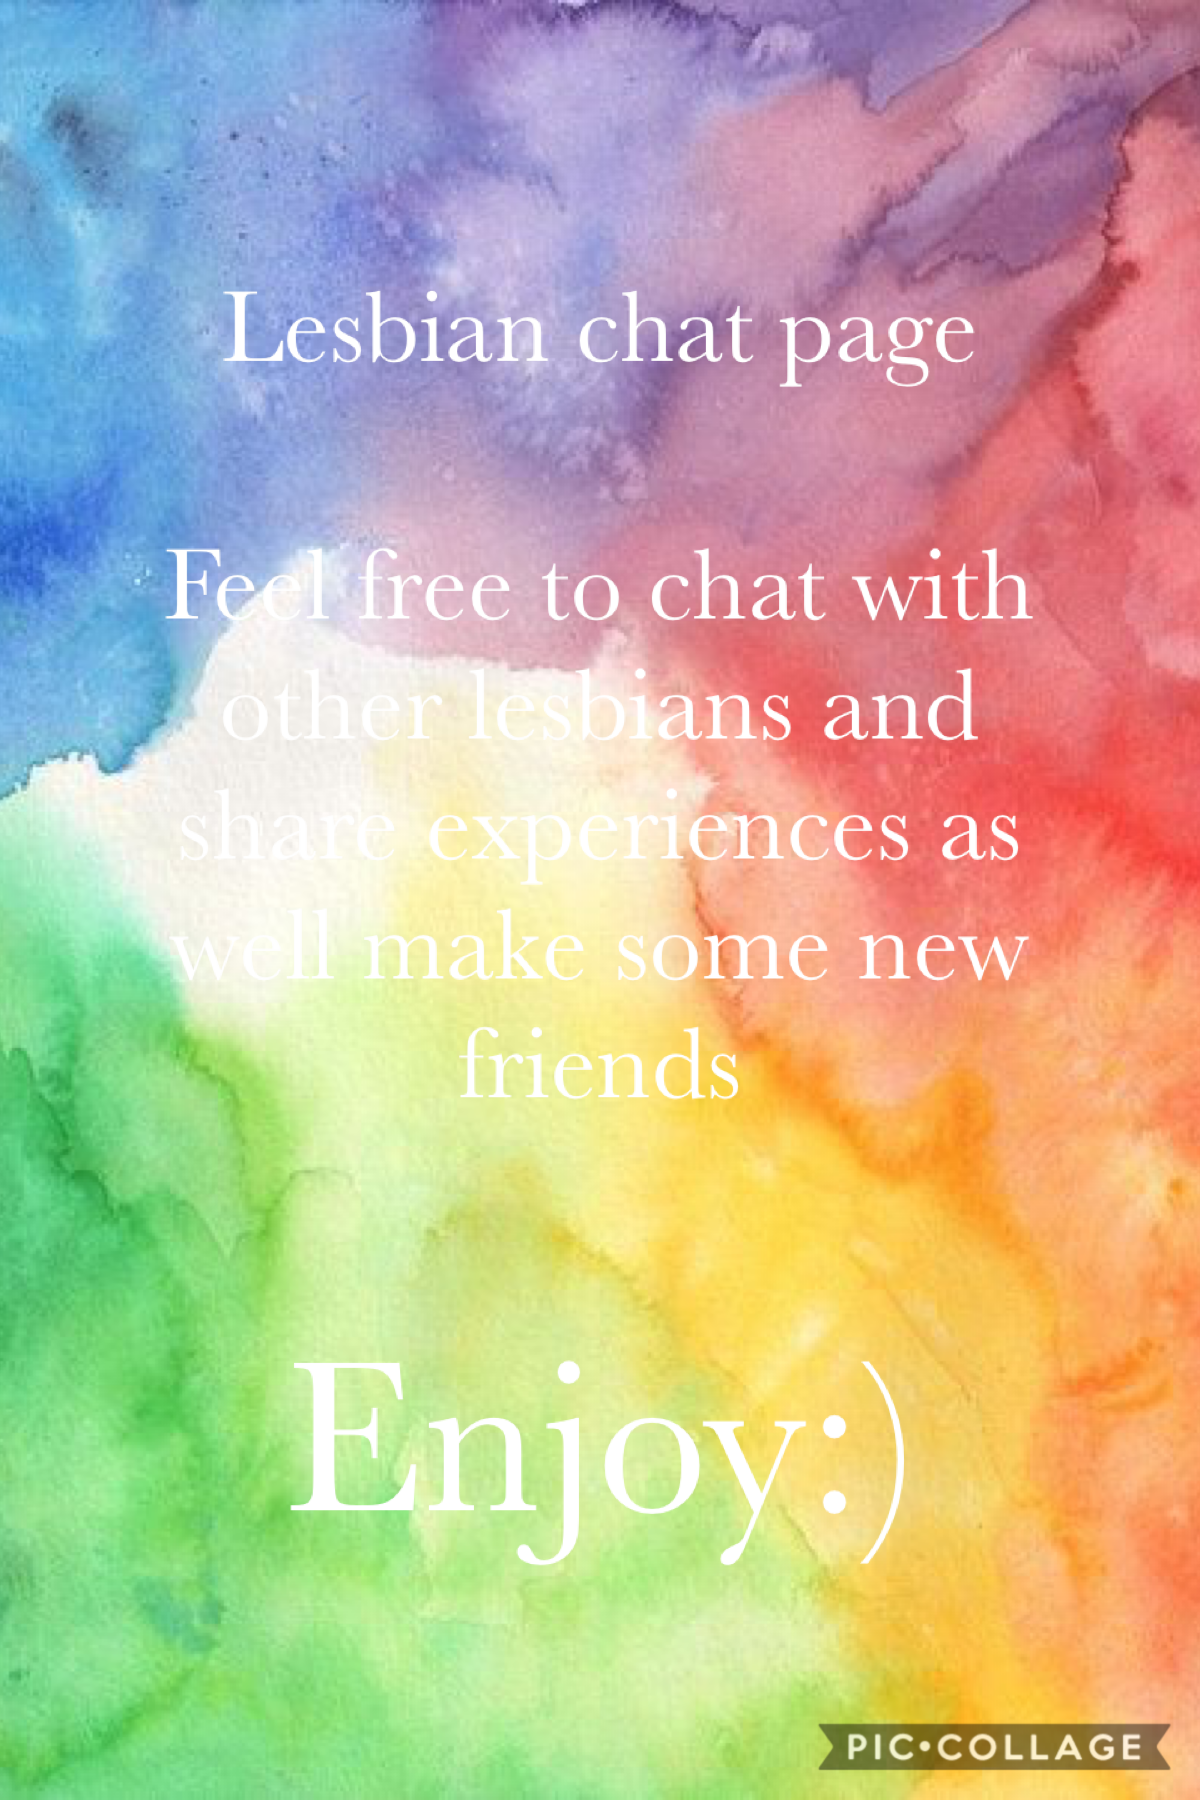 Lesbian chat page 